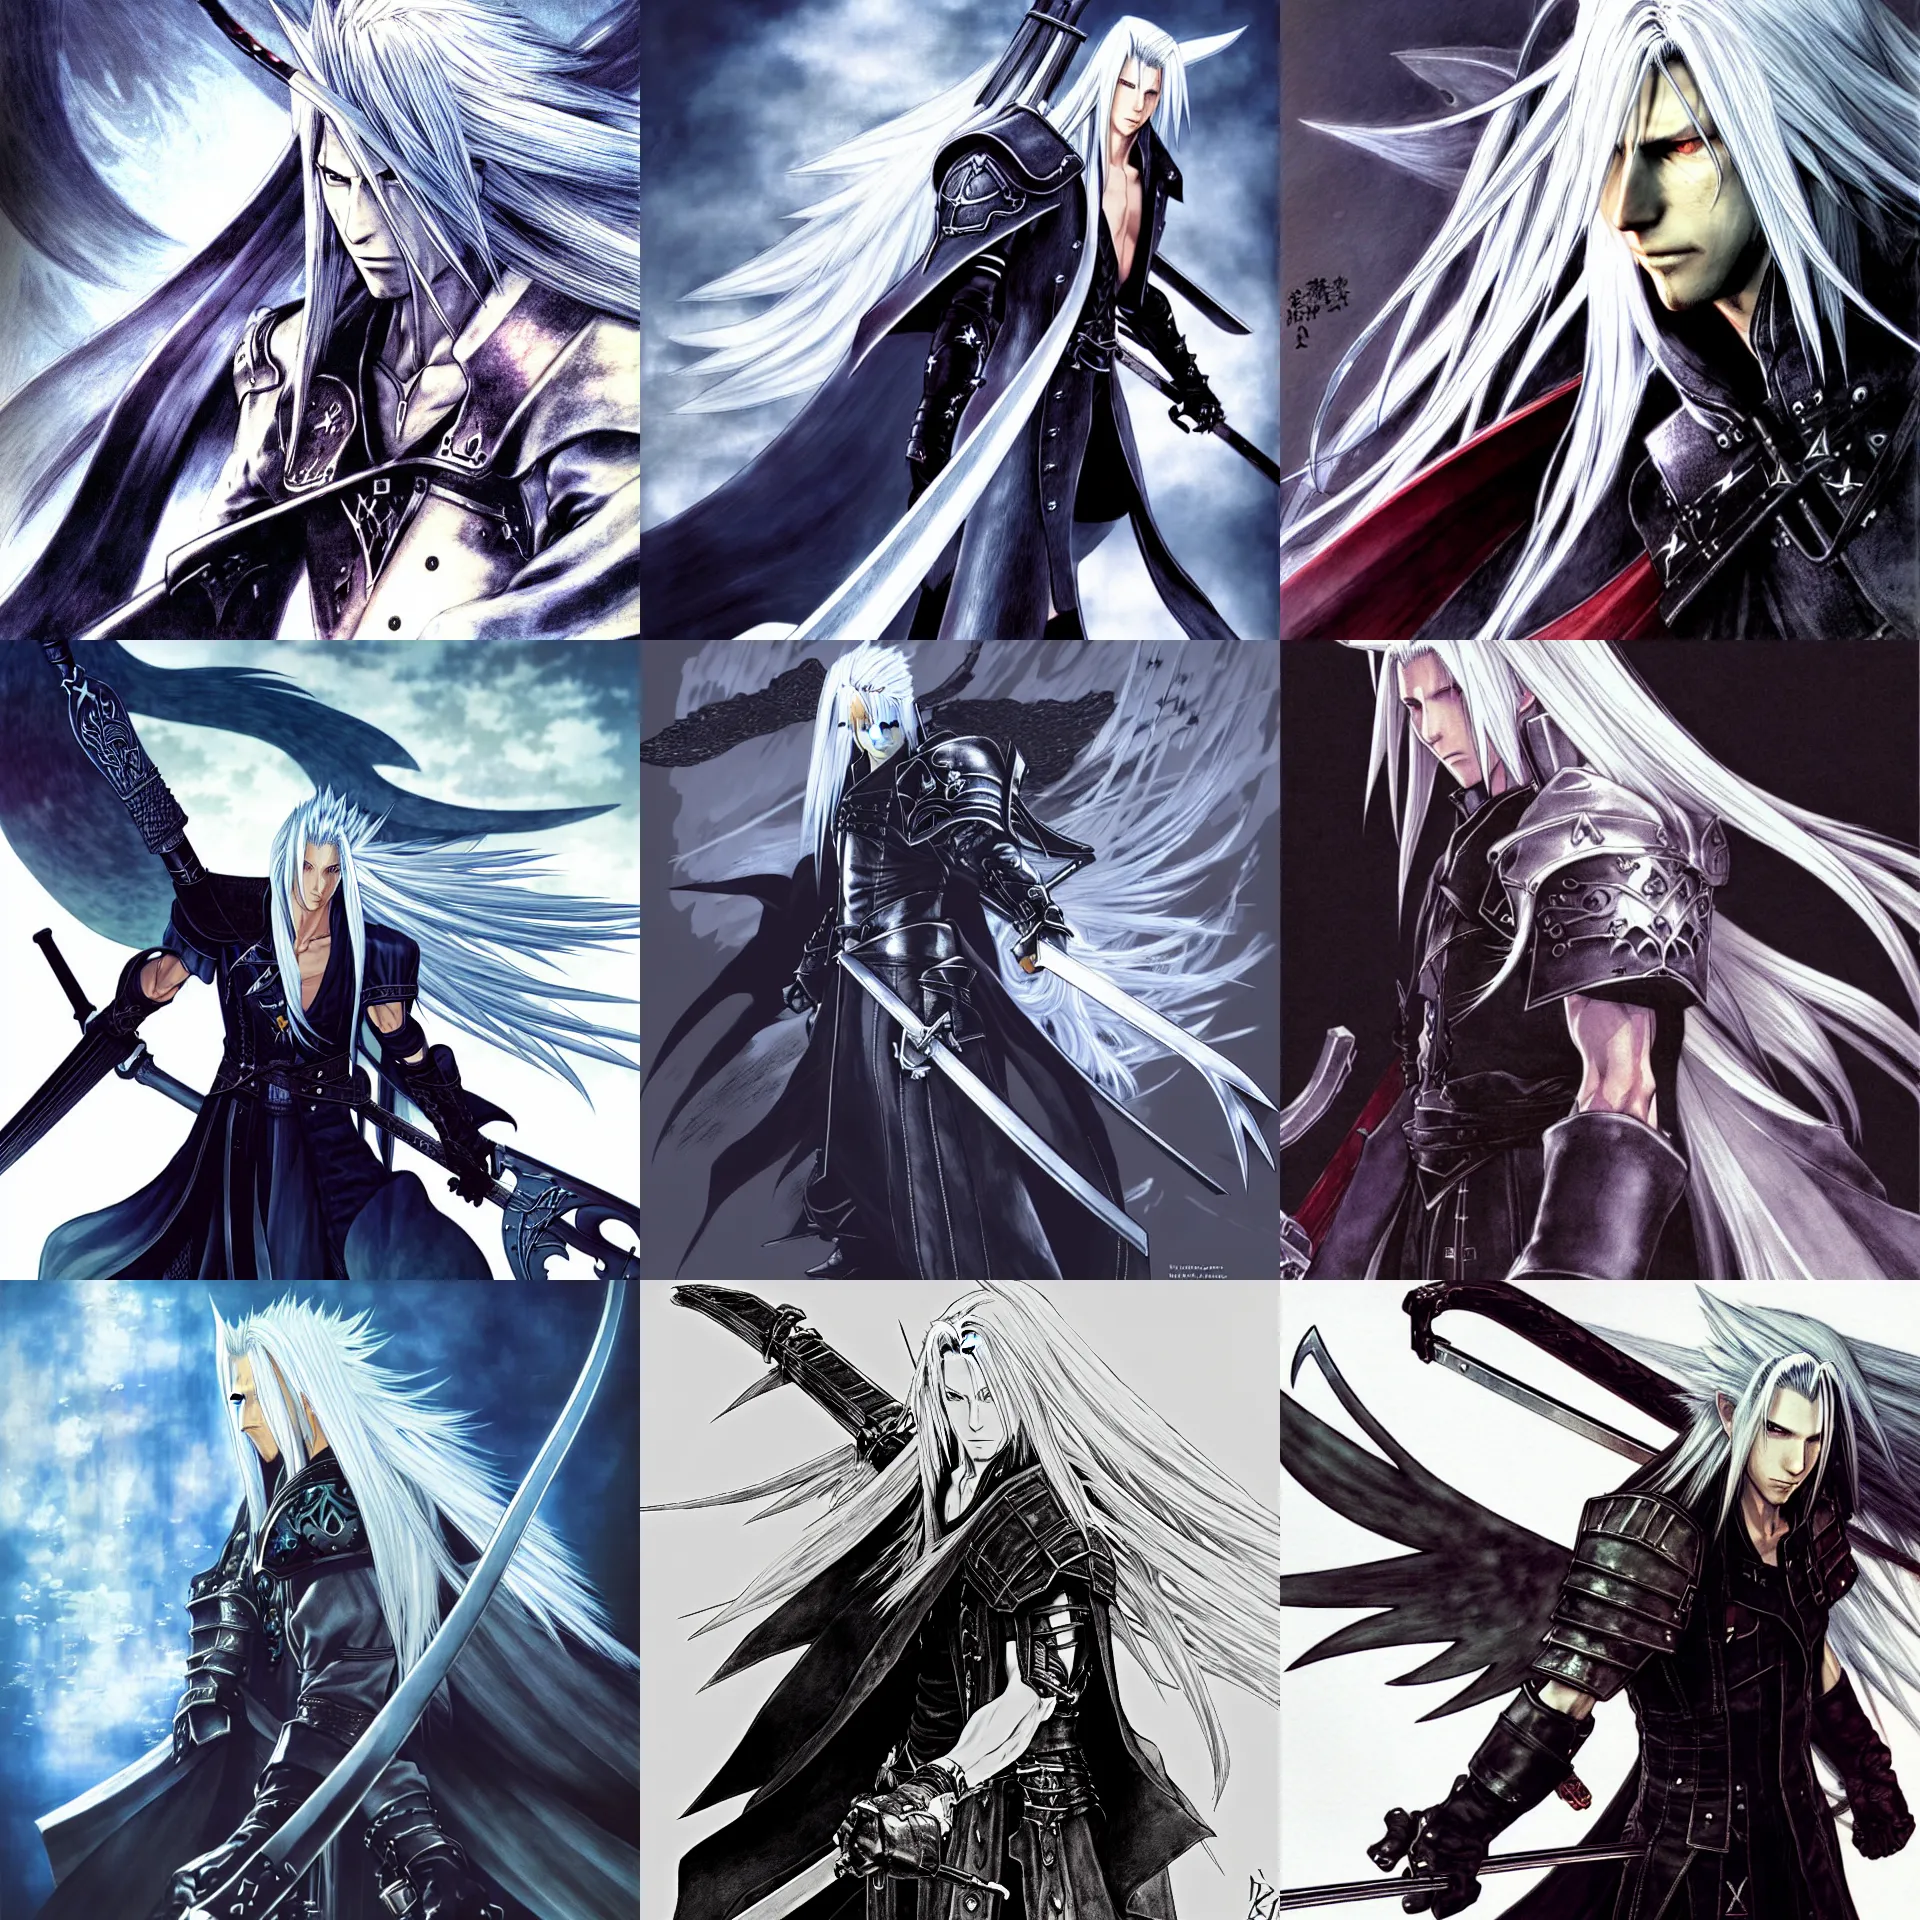 Image similar to Sephiroth illustrated by Akihiko Yoshida, concept art